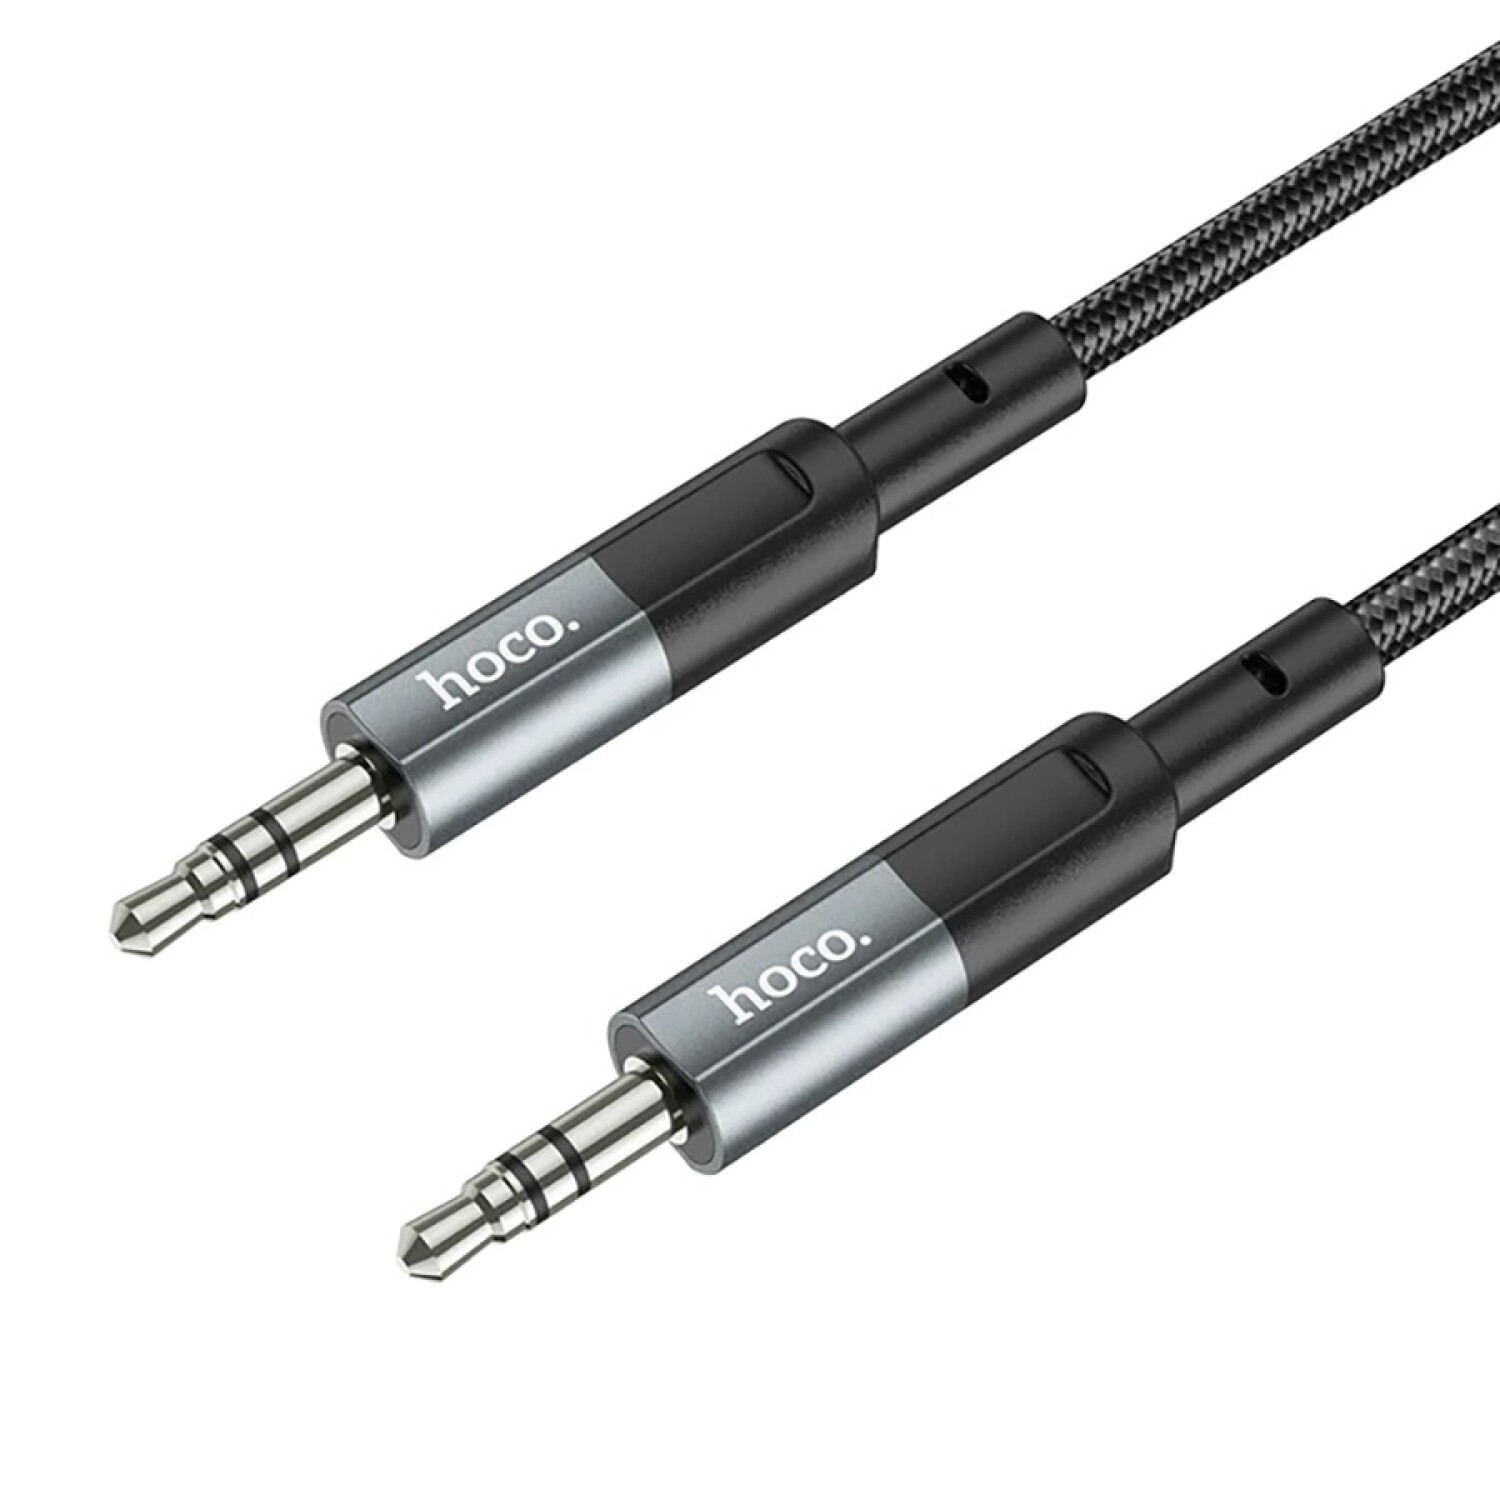 HOCO Cable Aux Adaptador Lightning a Jack 3,5 mm Para iPhone 1m